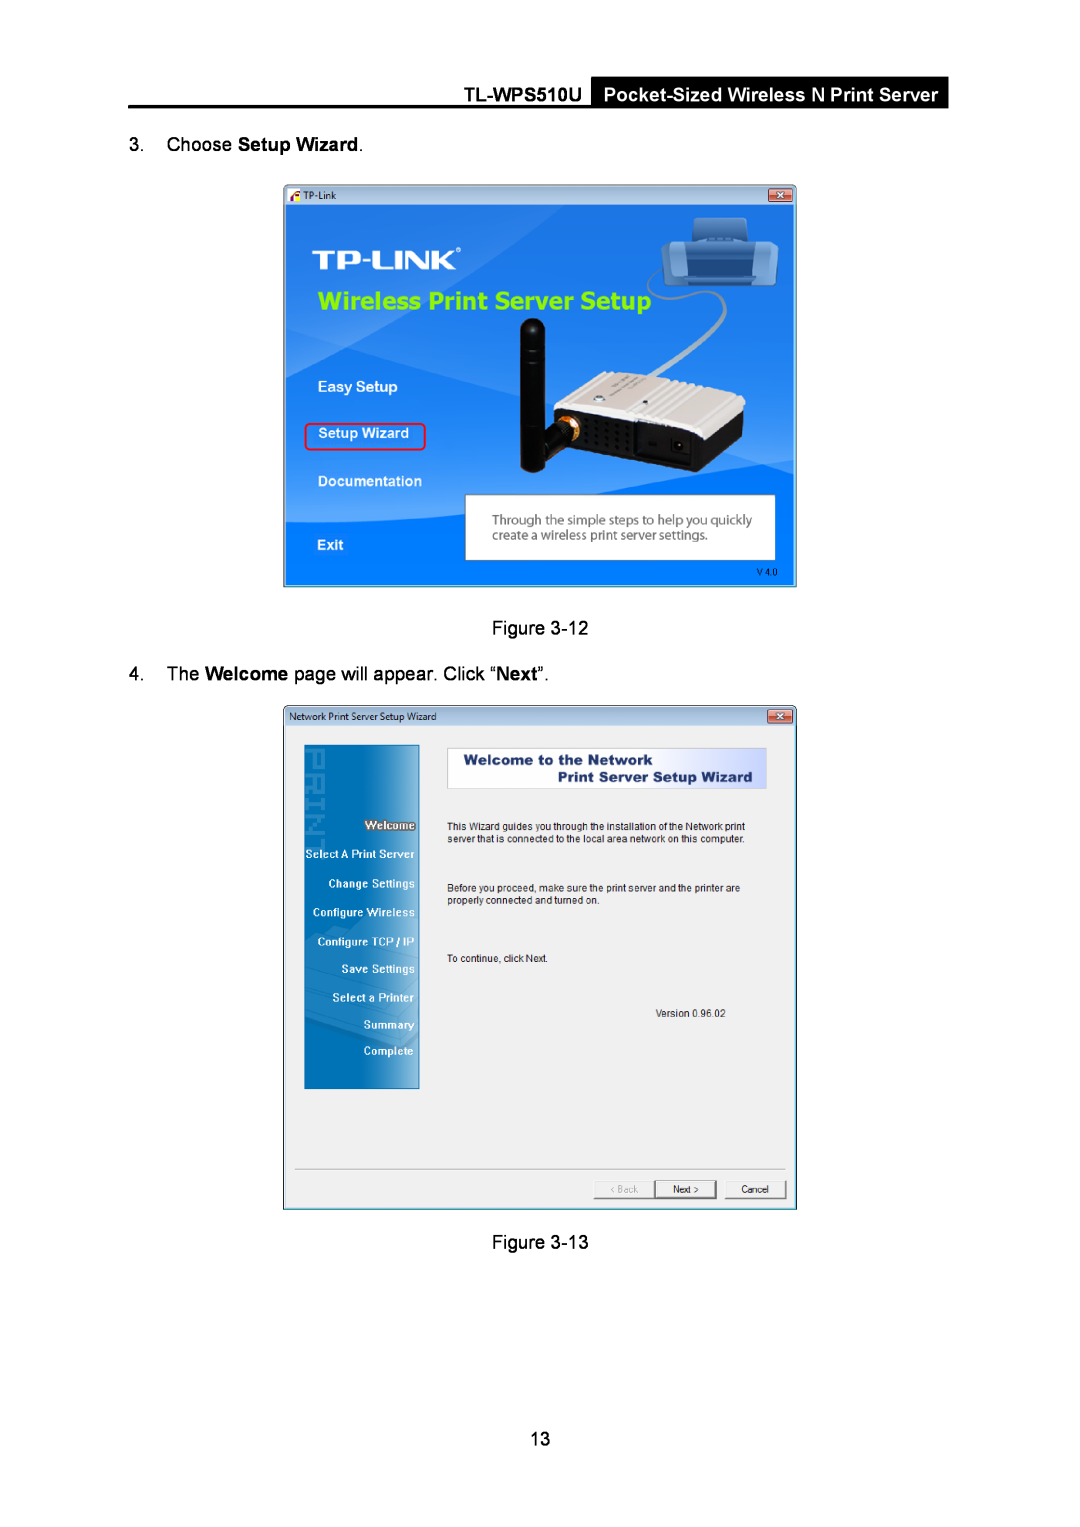 TP-Link tl-wps510u manual TL-WPS510U, Pocket-Sized Wireless N Print Server, Choose Setup Wizard 